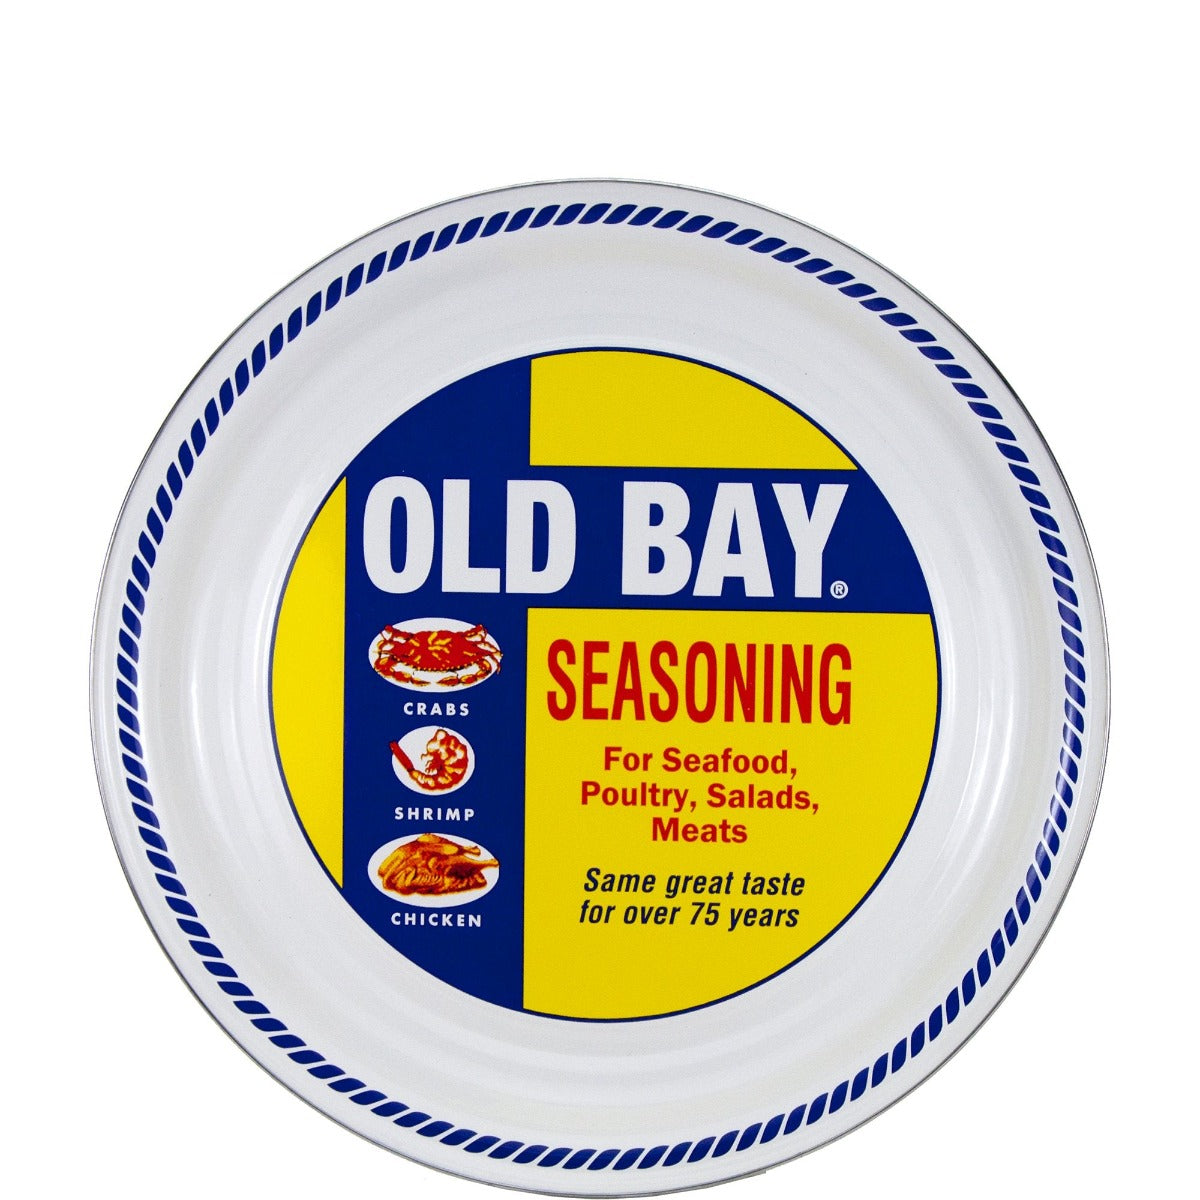 Old Bay Medium Tray- A beautiful gift